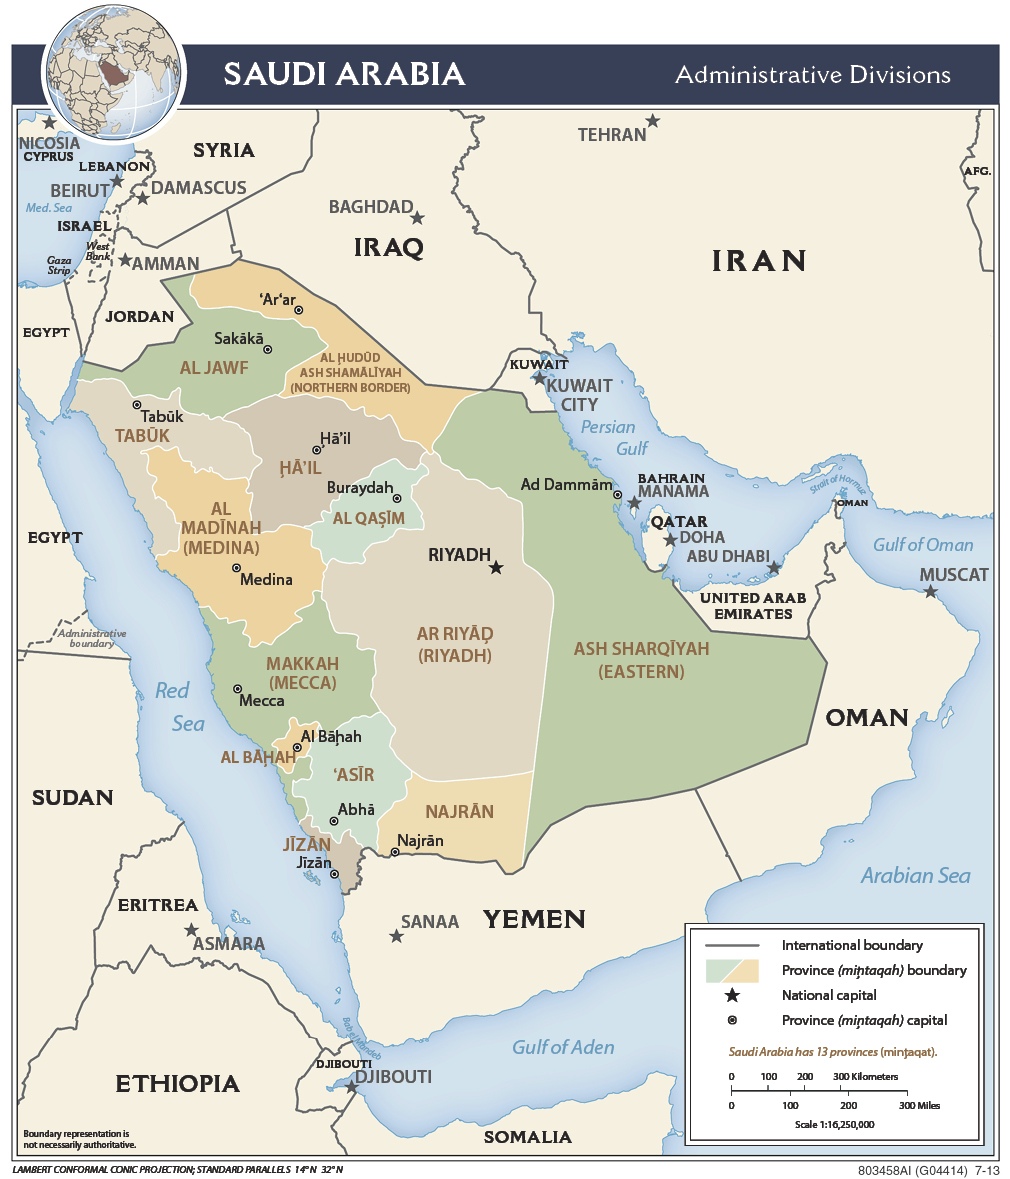 Arabia_Saudi_political MAP KART- CIA